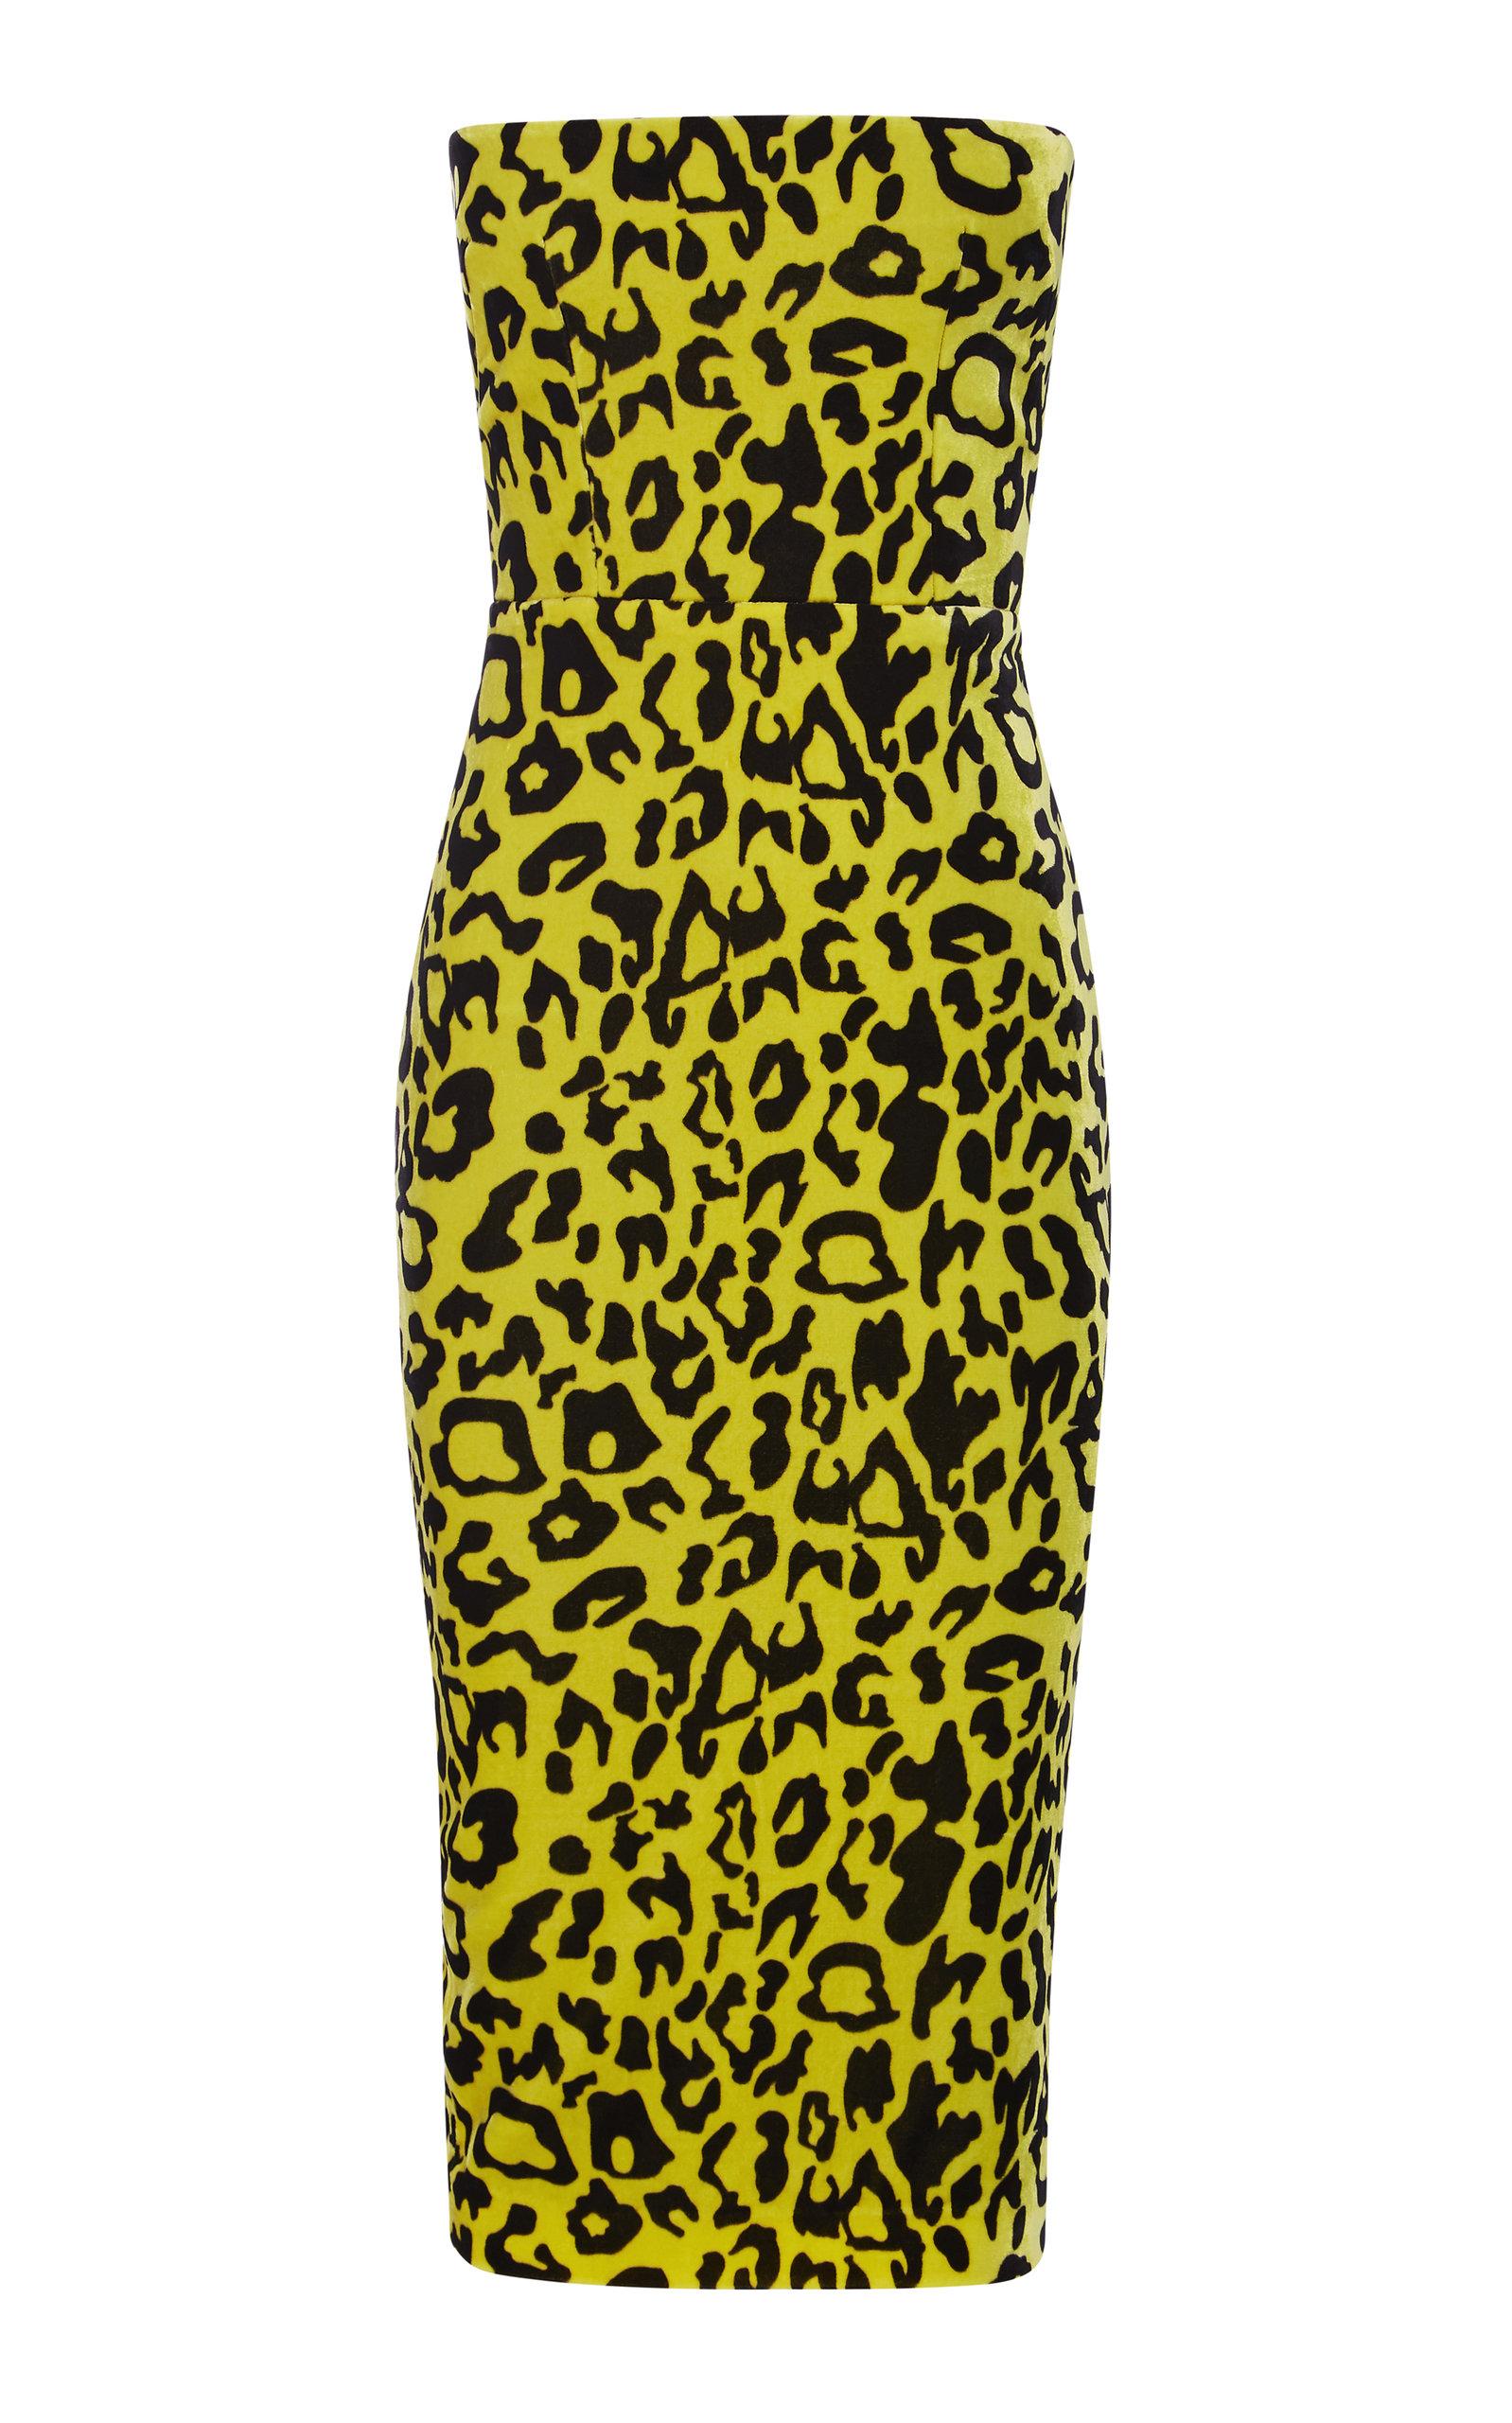 leopard print dress yellow